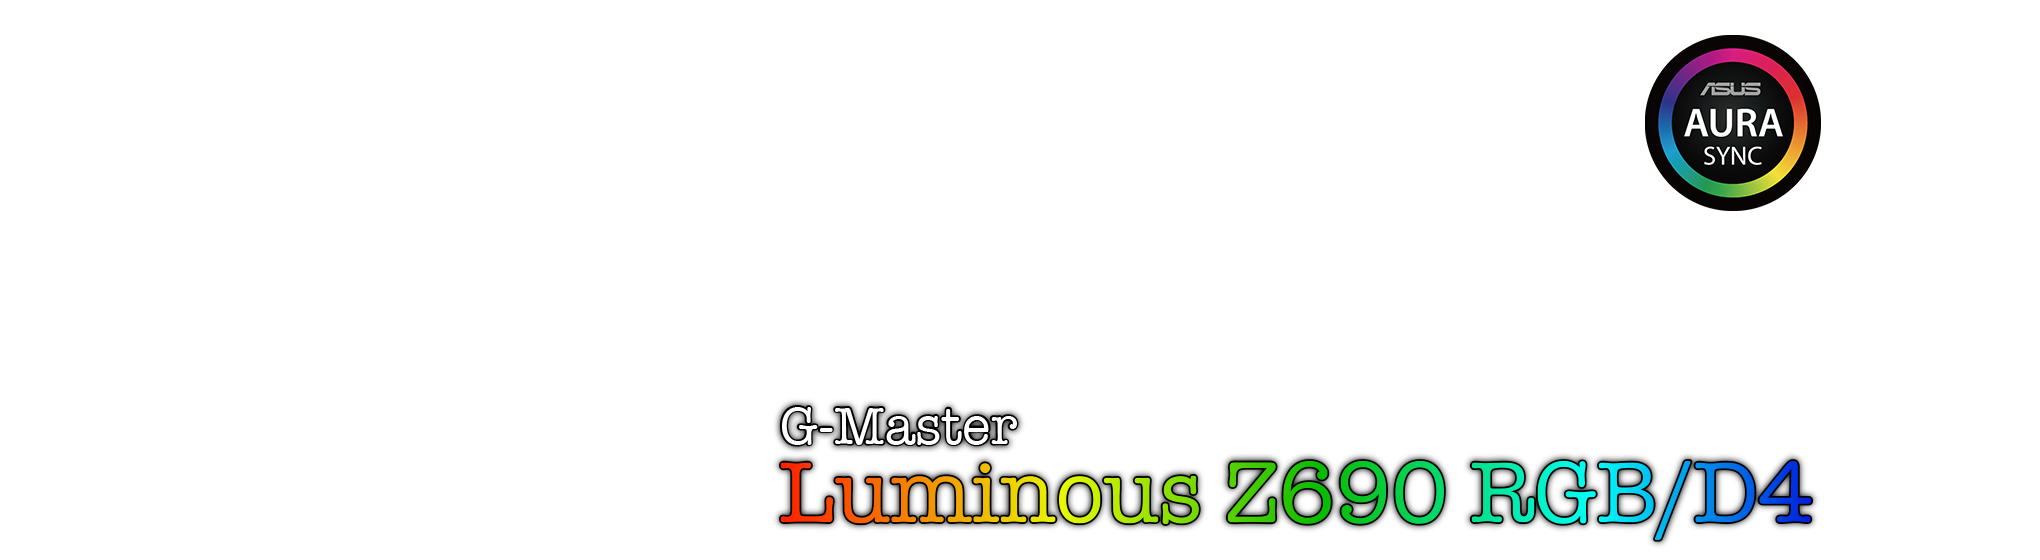 Asus Aura Sync G-Master Luminous Z590 RGB